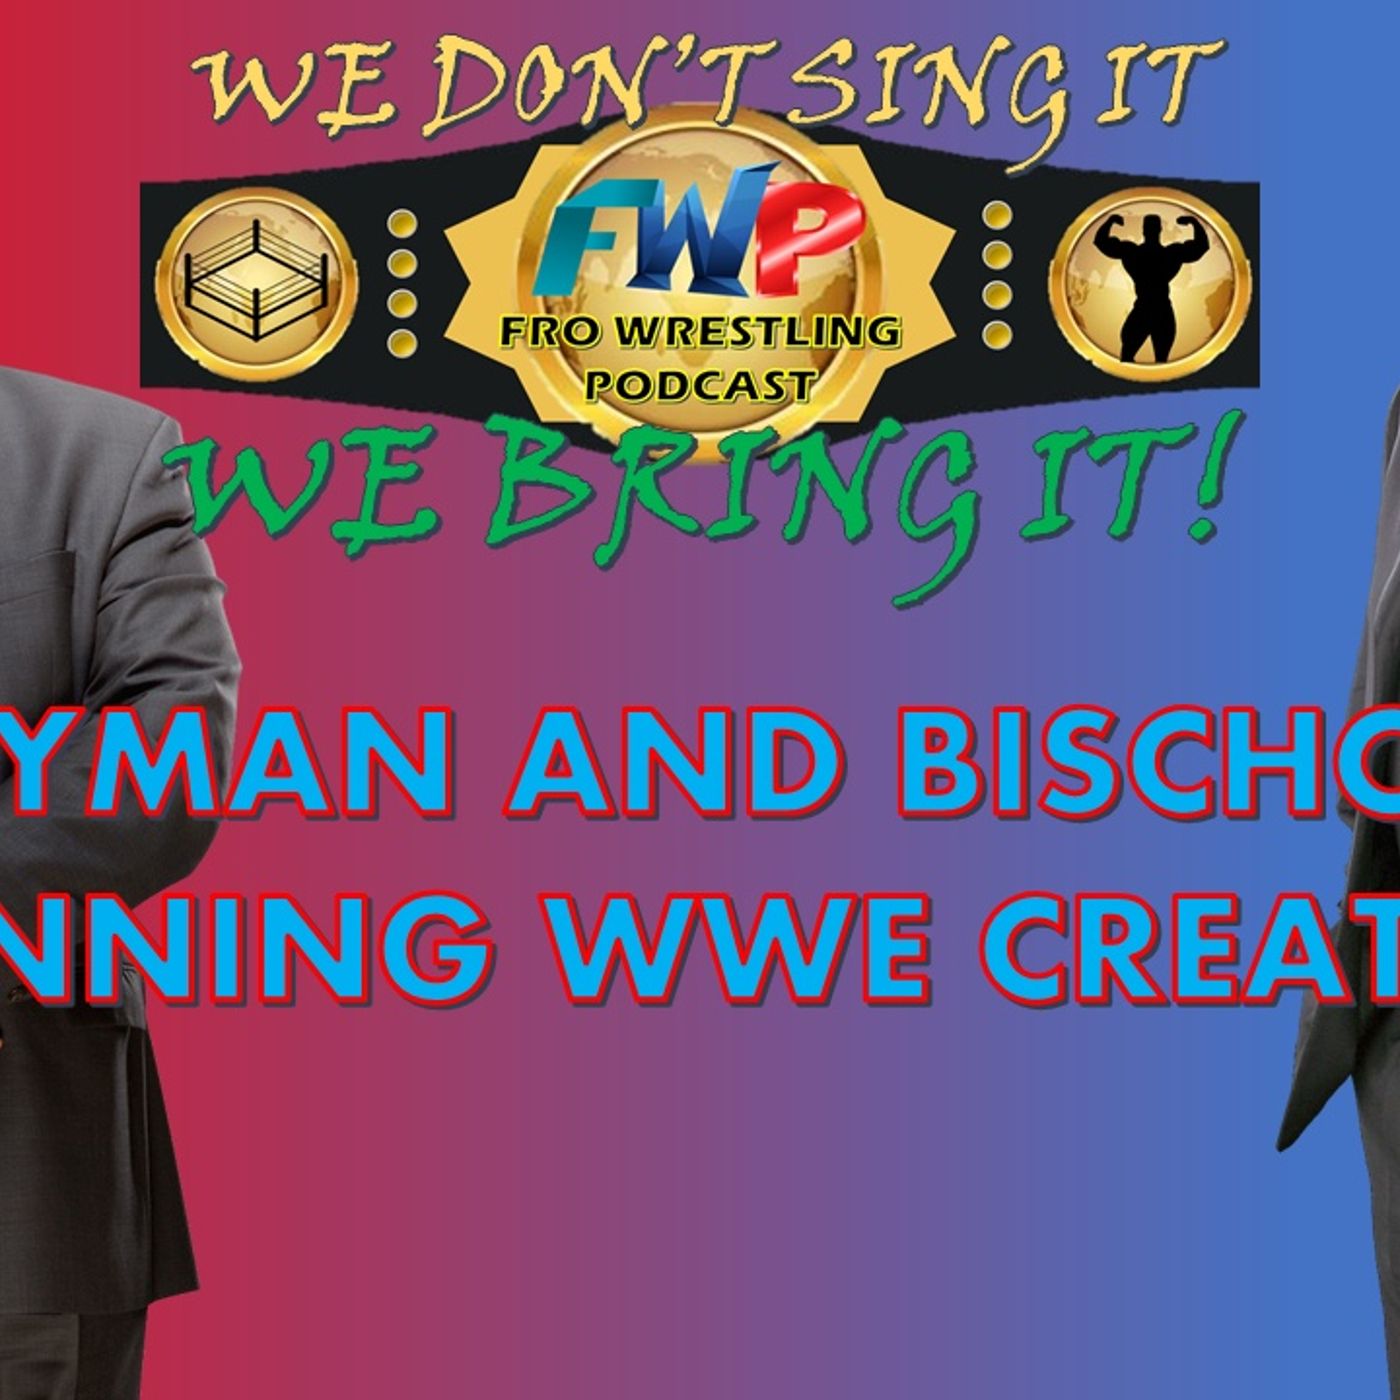 Heyman and Bischoff Run WWE Creative!